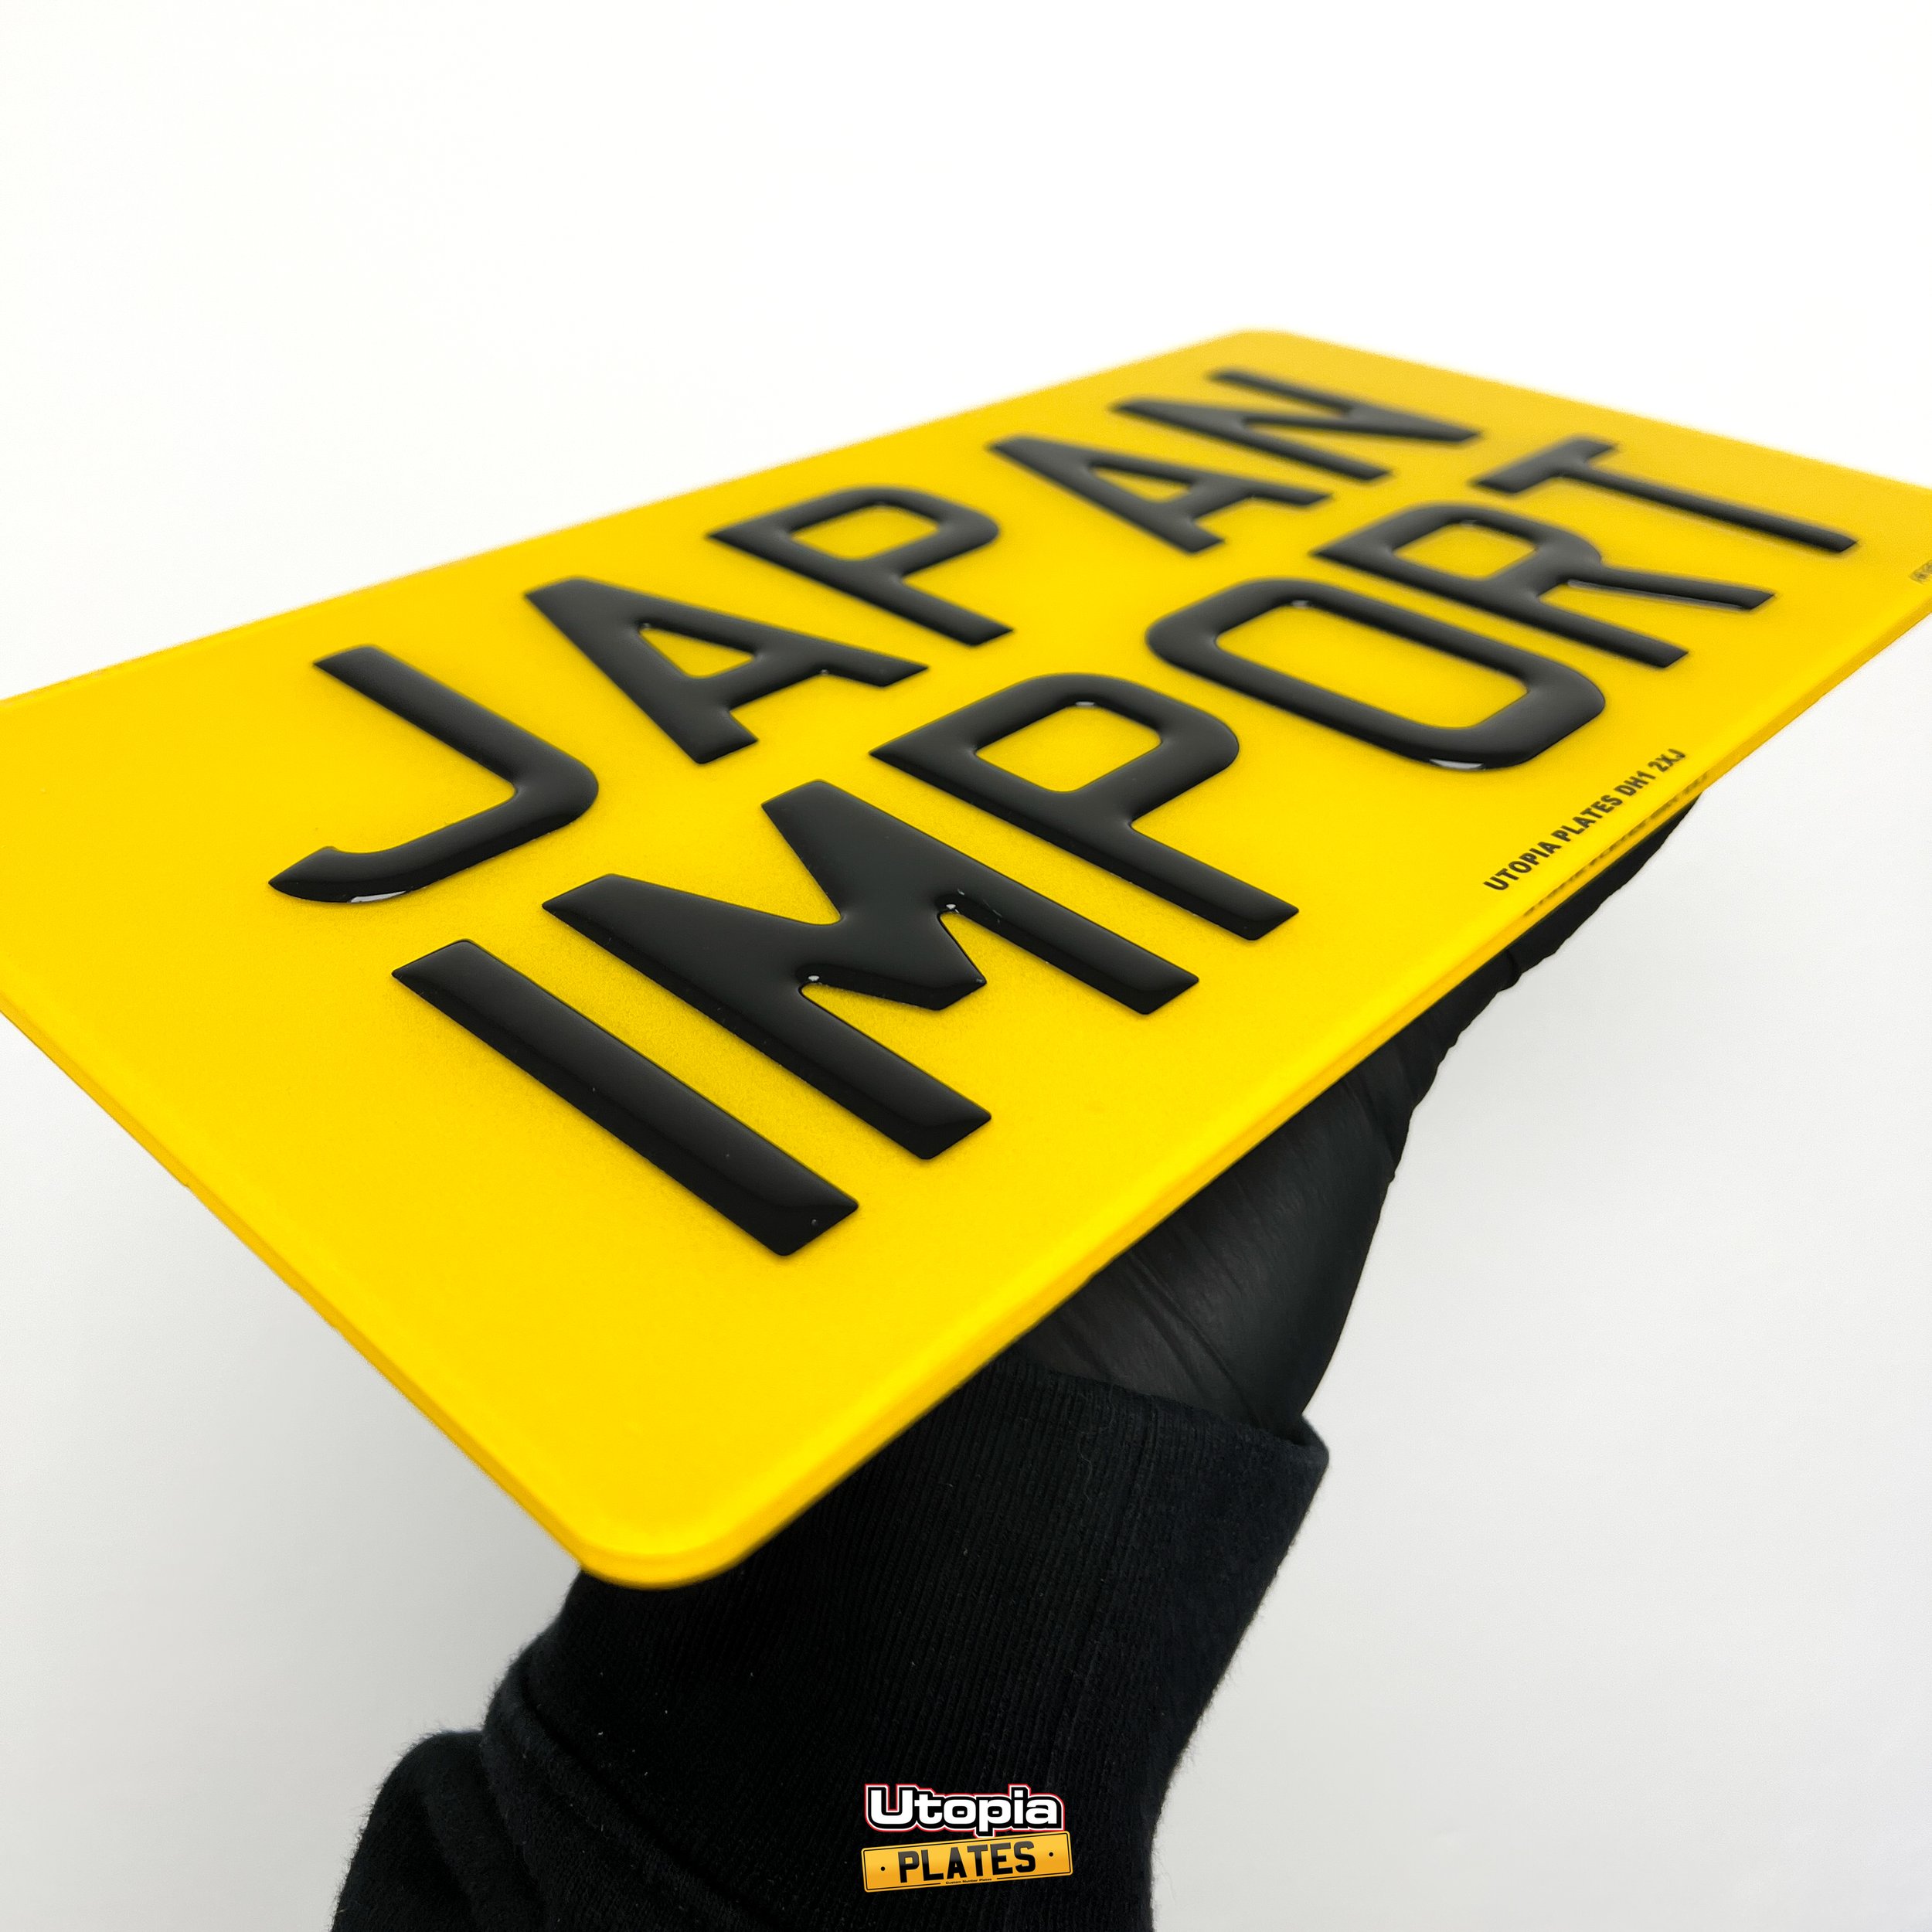 jdm-plates-japanese-import-13-x7-utopia-plates-4d-laser-cut